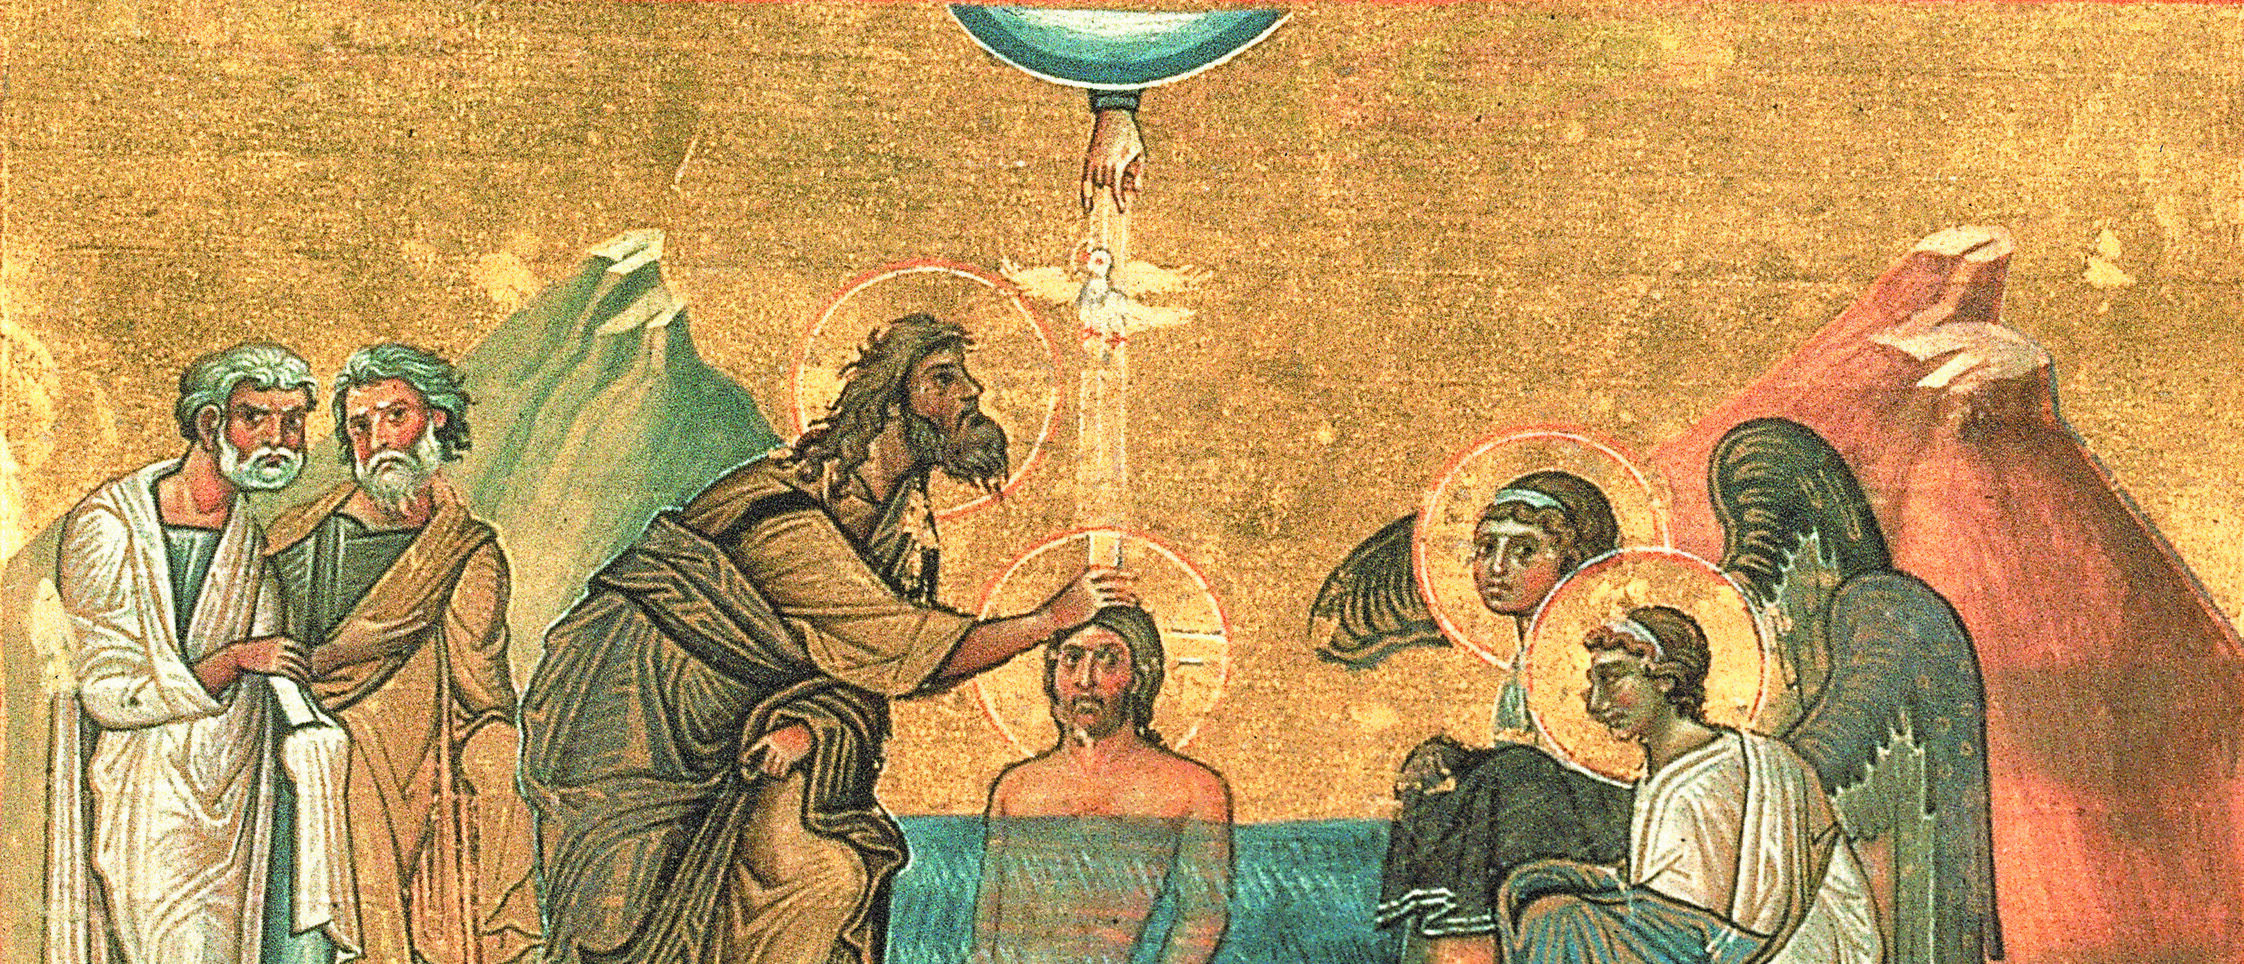 Le baptême du Christ - Menologion de Basile (10e siècle)